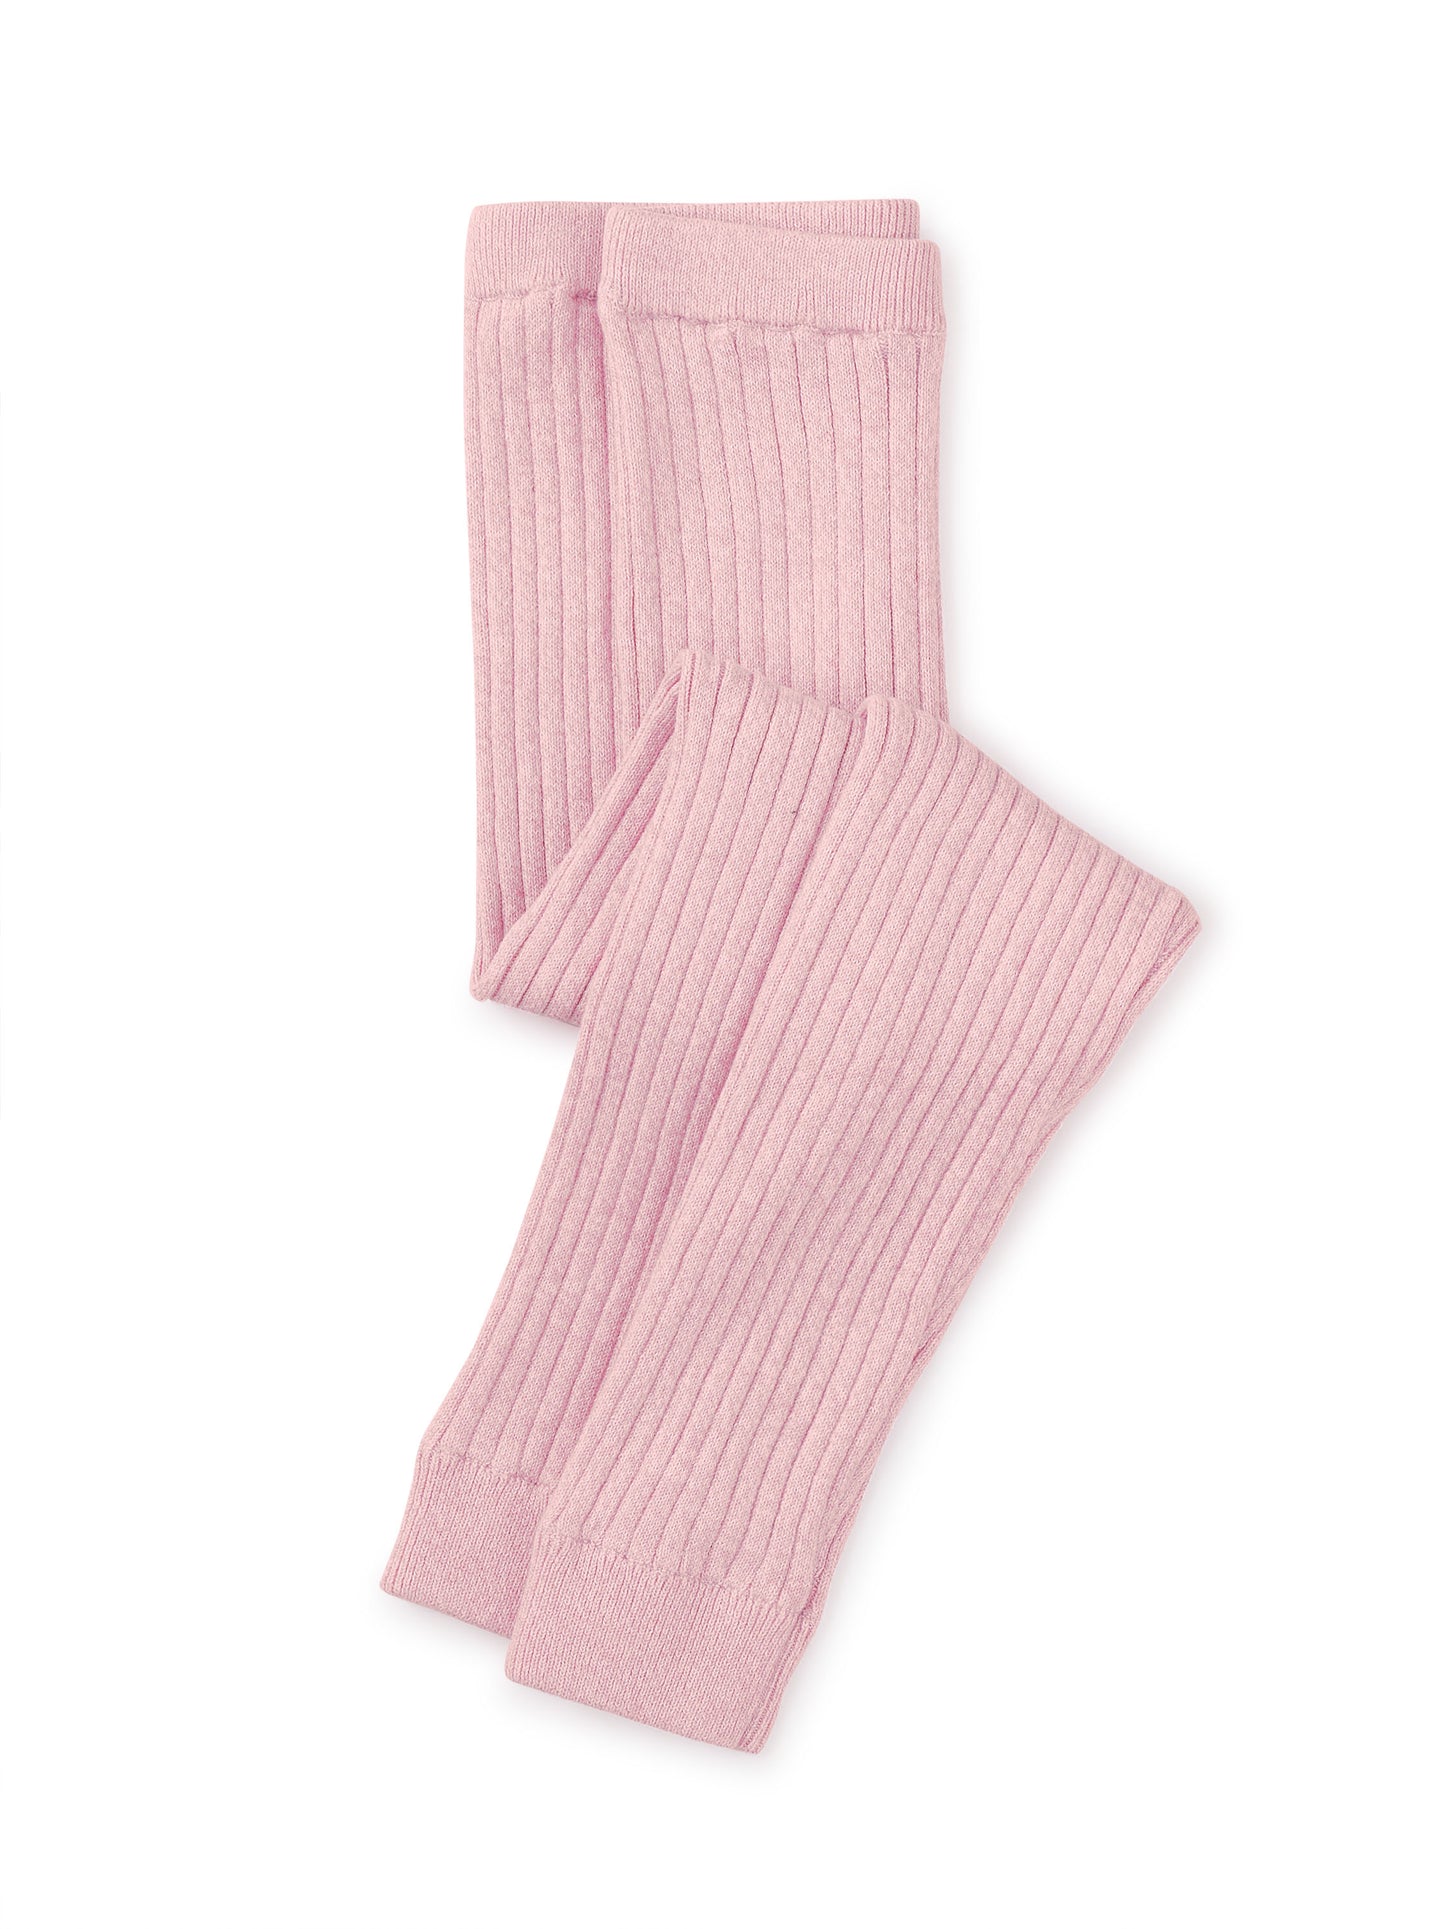 Toddler Marled Sweater Leggings - Honeysuckle Rose